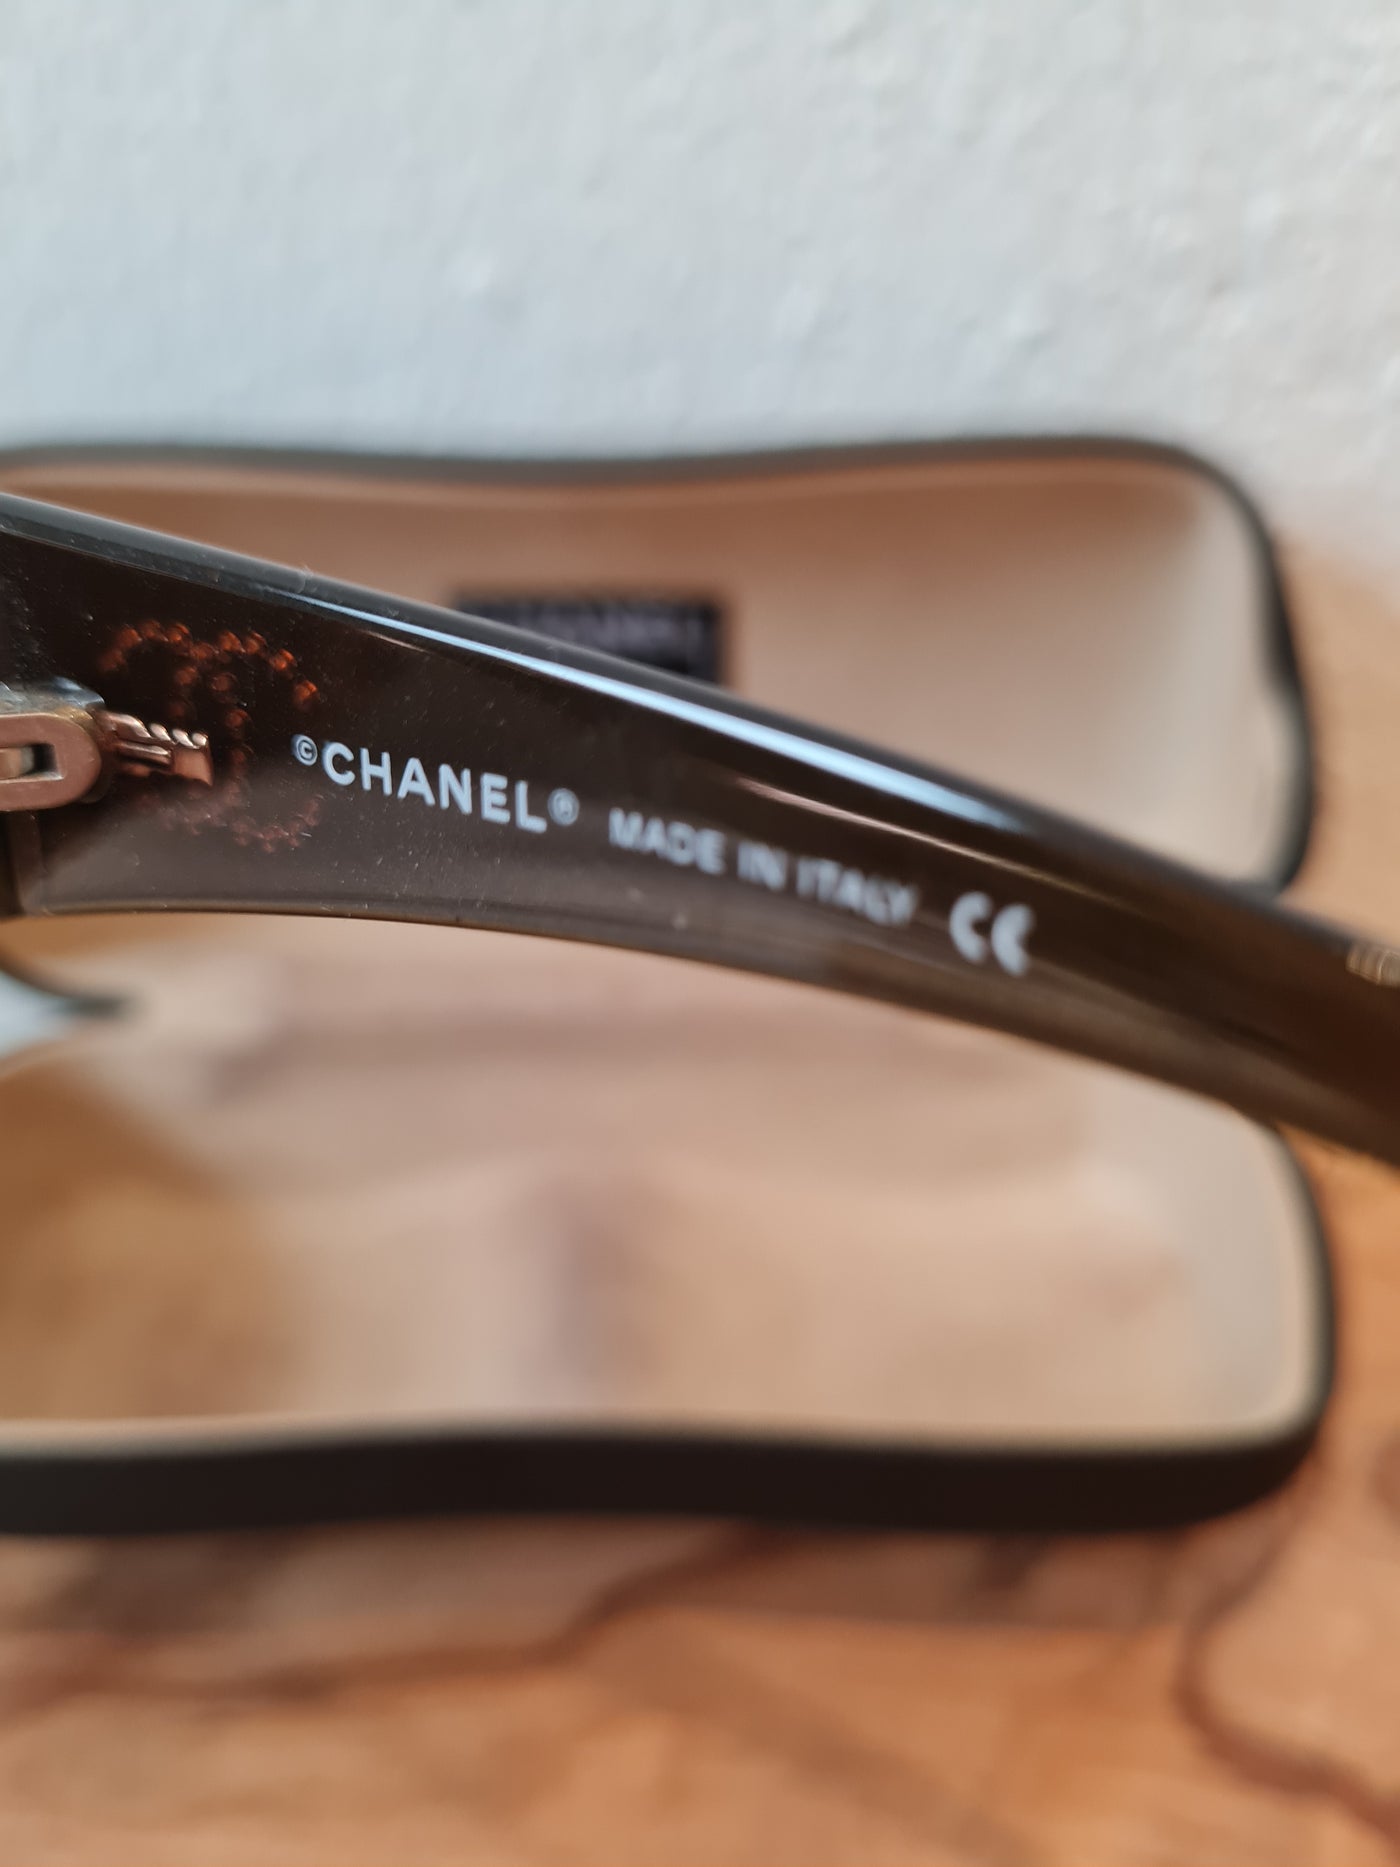 Chanel Wraparound Sunglasses